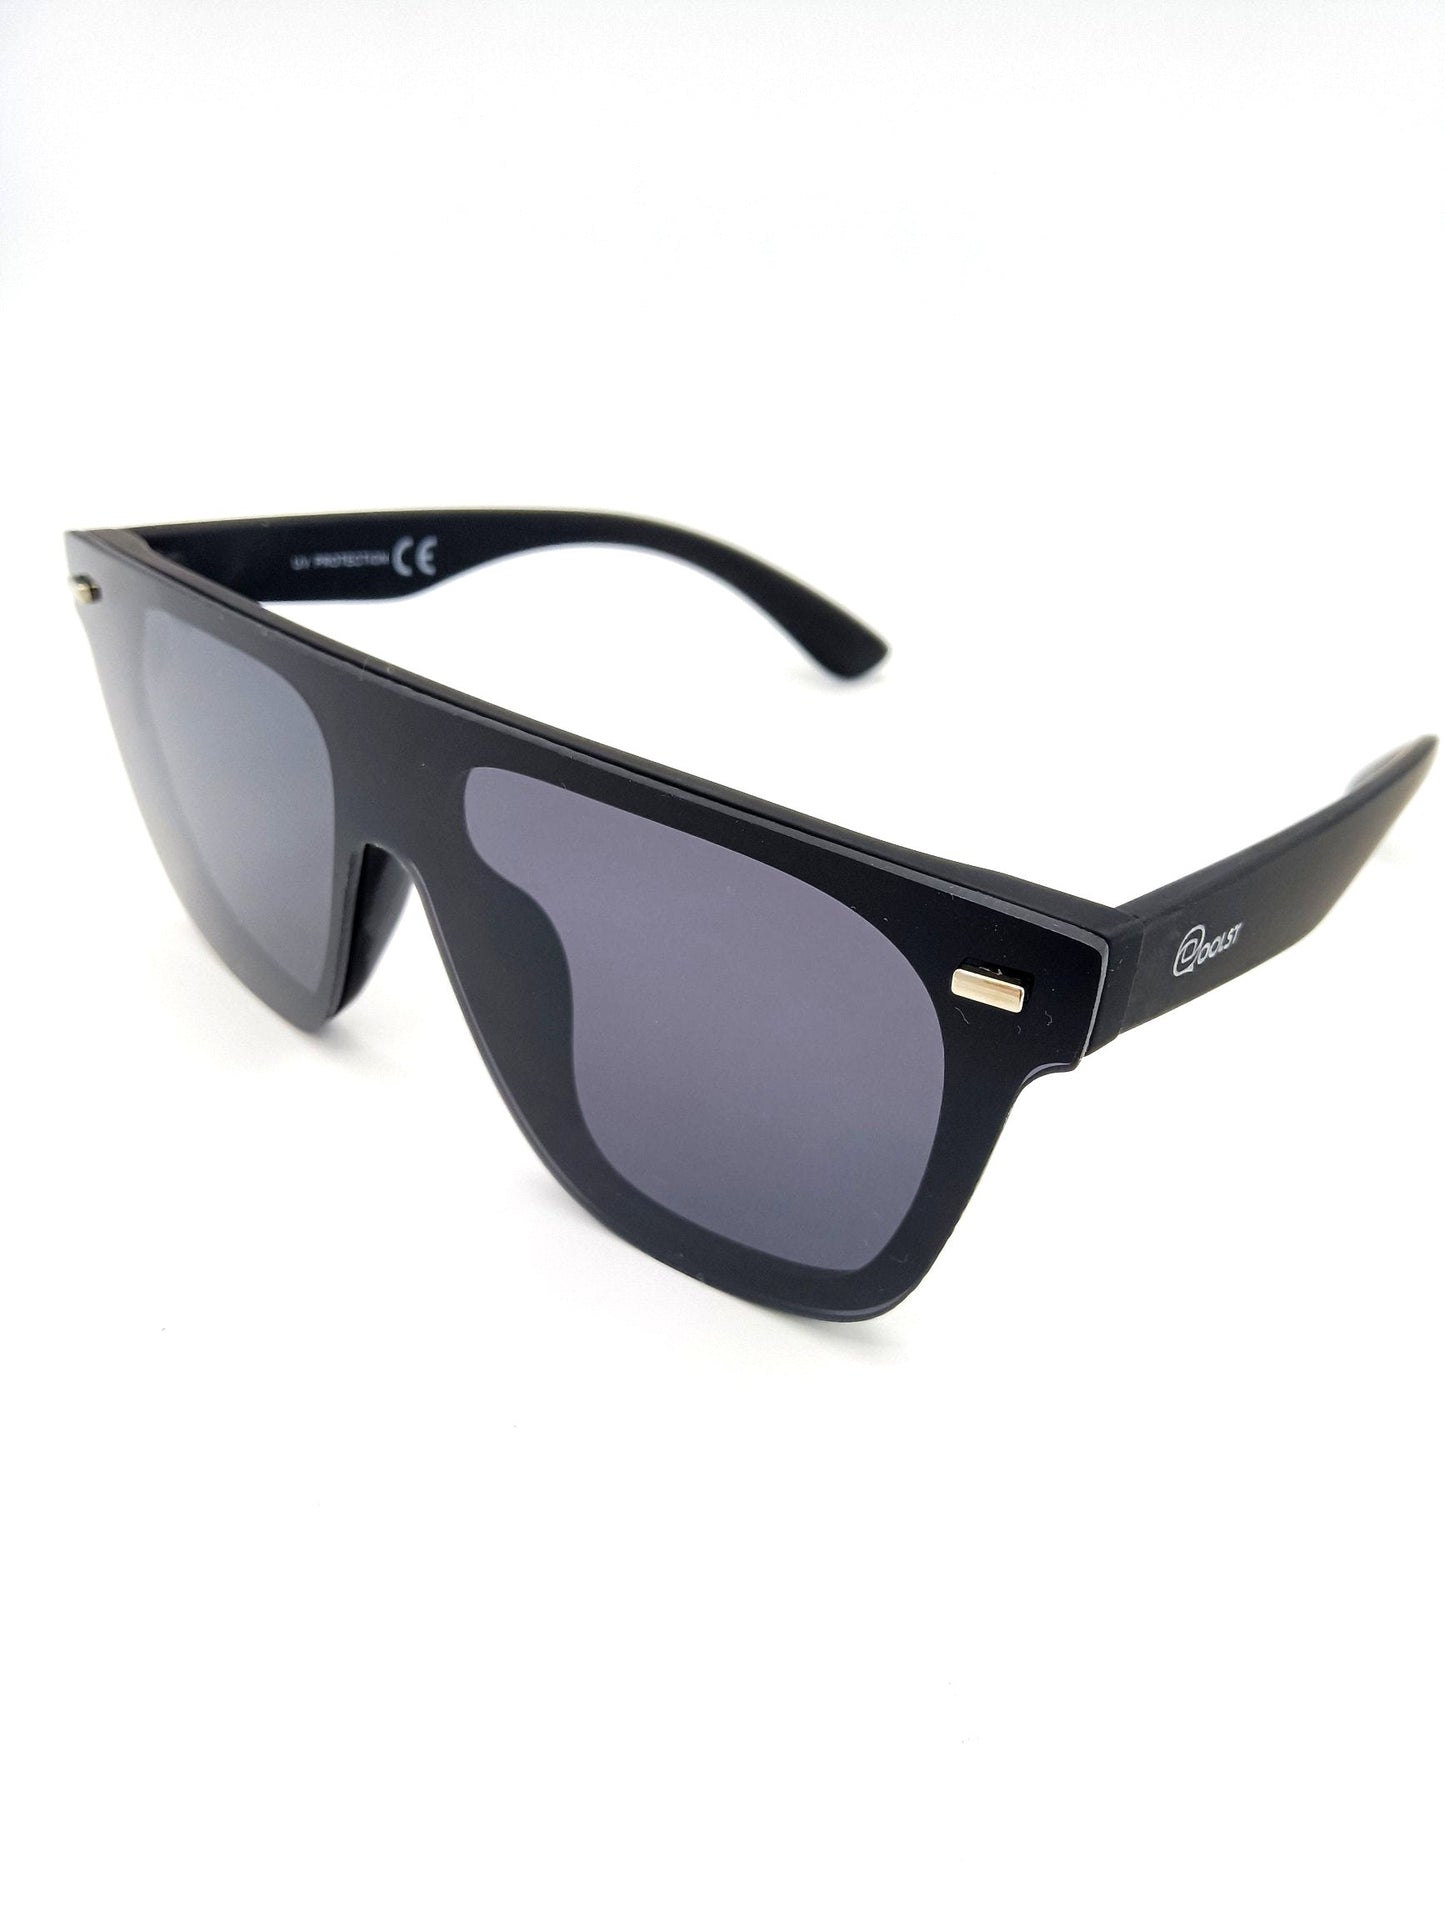 Sunglasses for women and men Qoolst Club